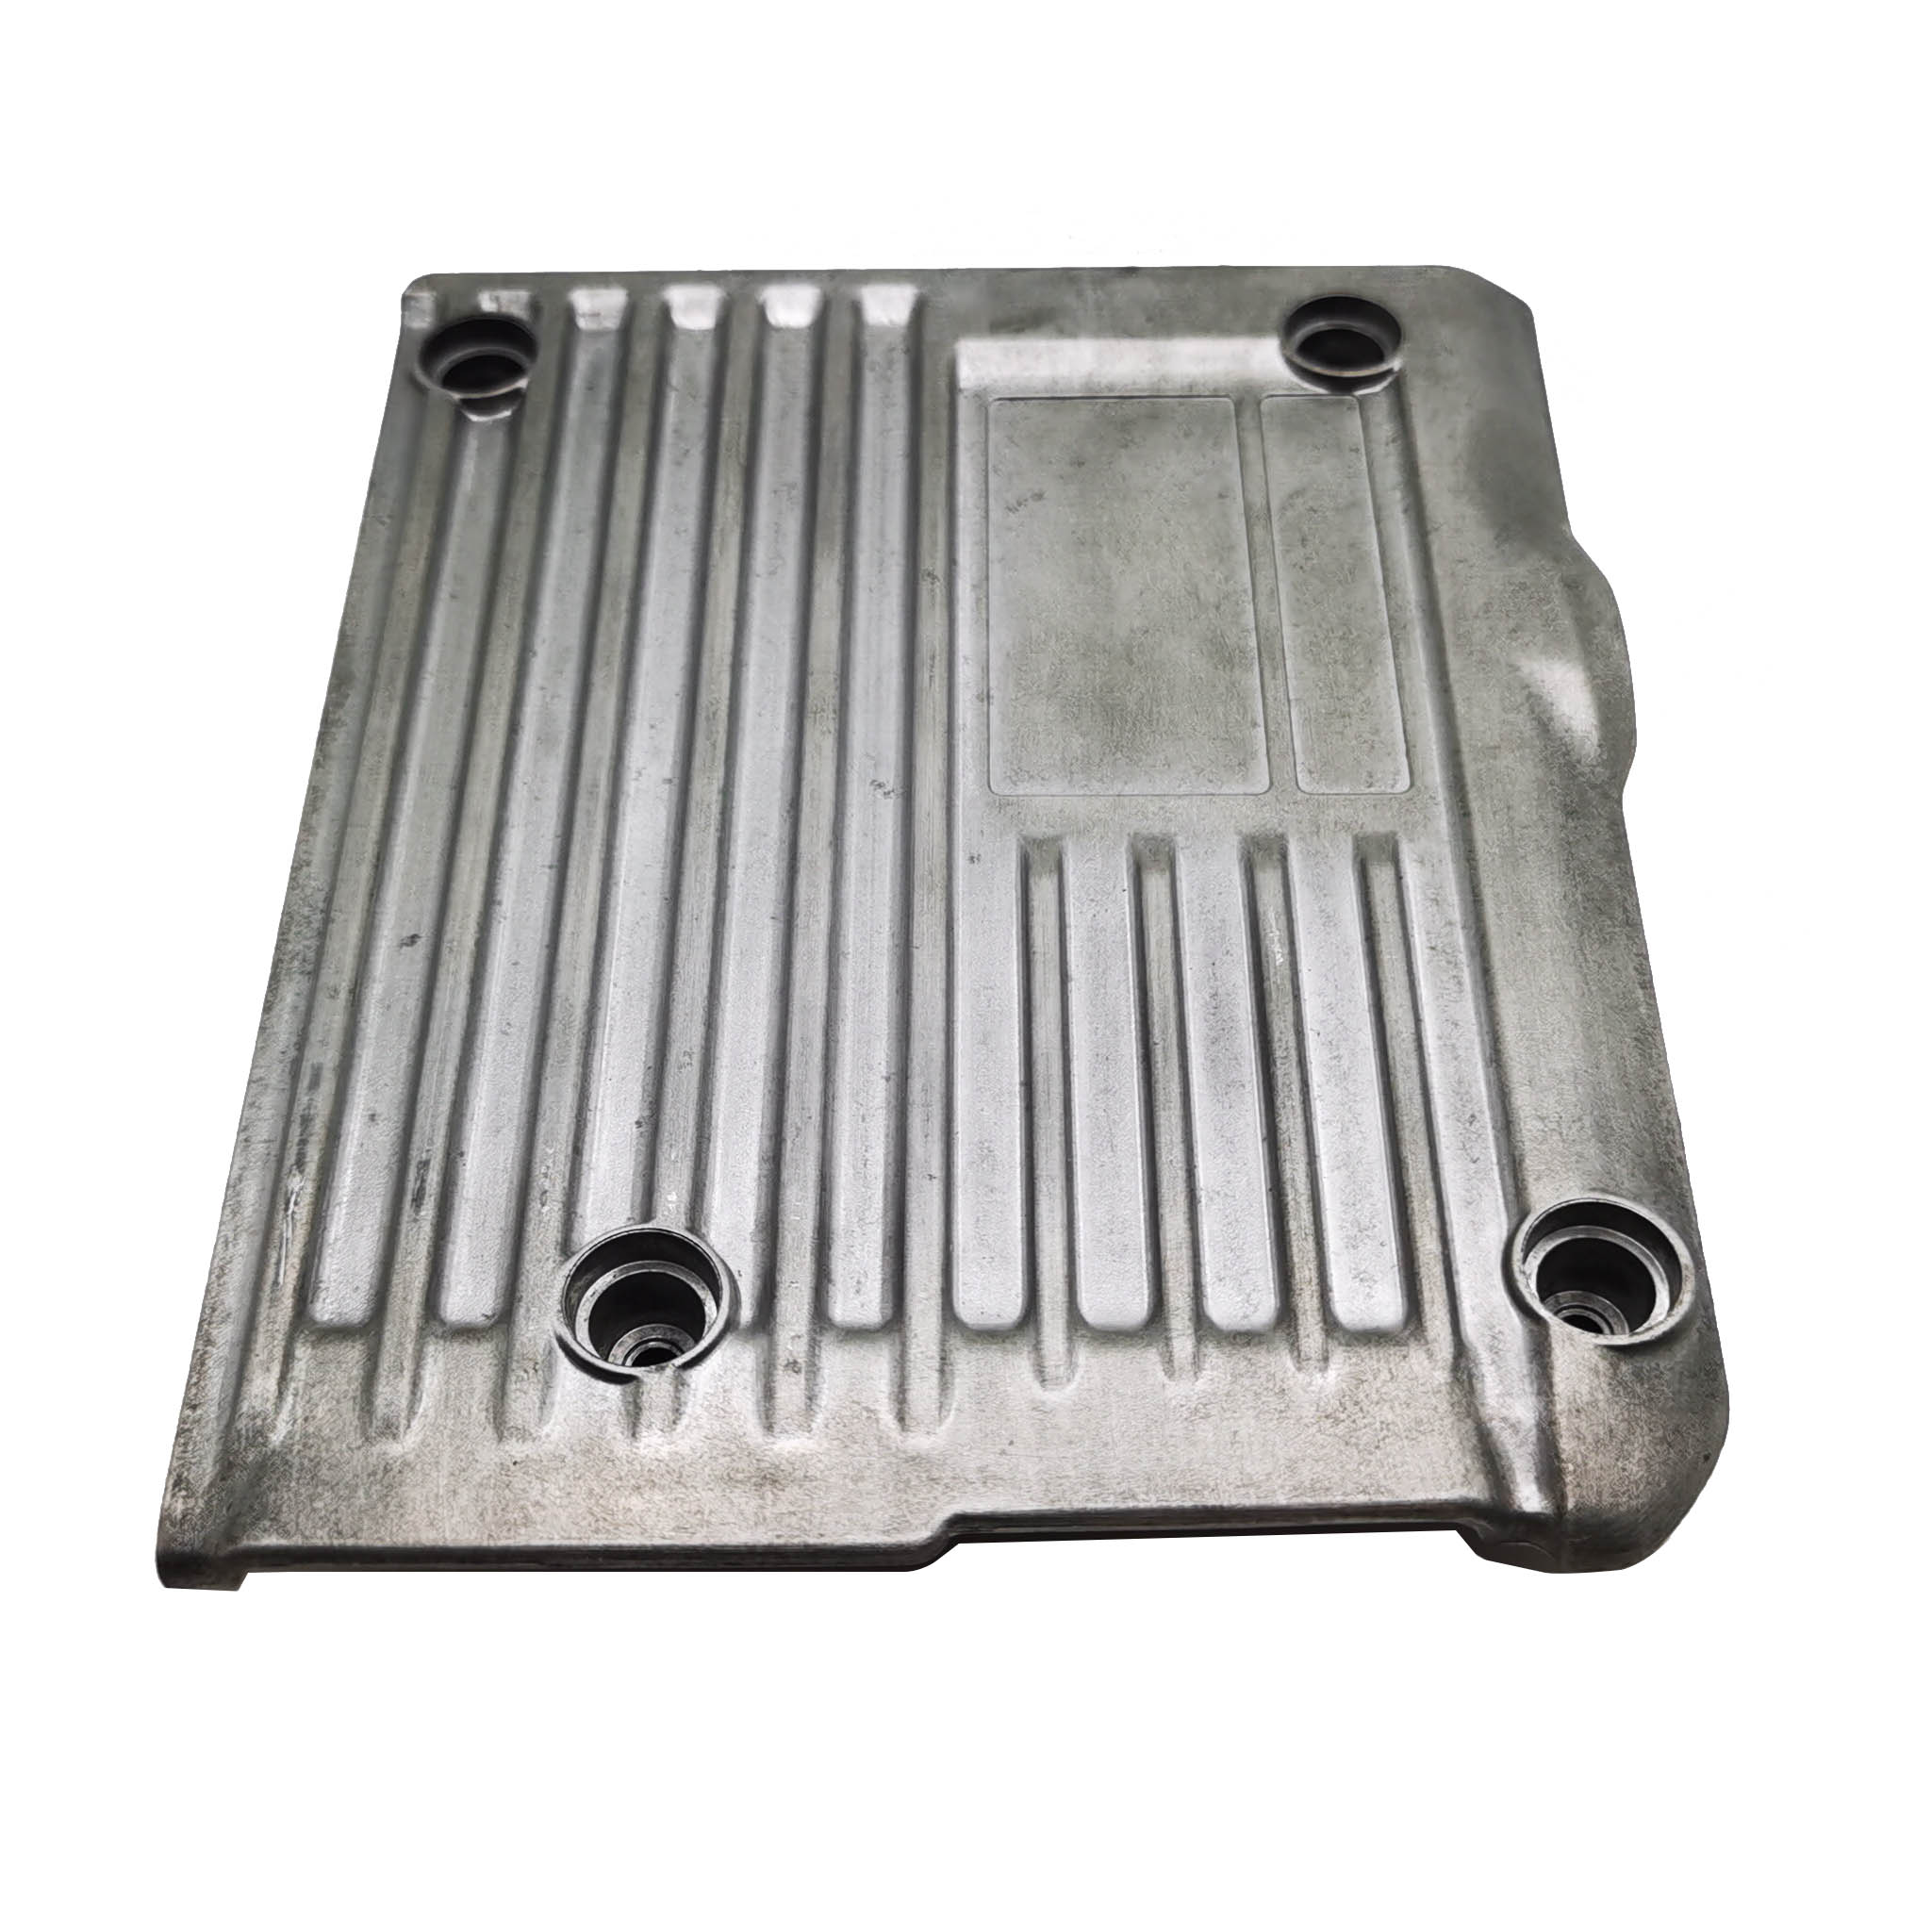 Customized kualitas dhuwur aluminium alloy die casting komponen logam seng alloy produk selaras